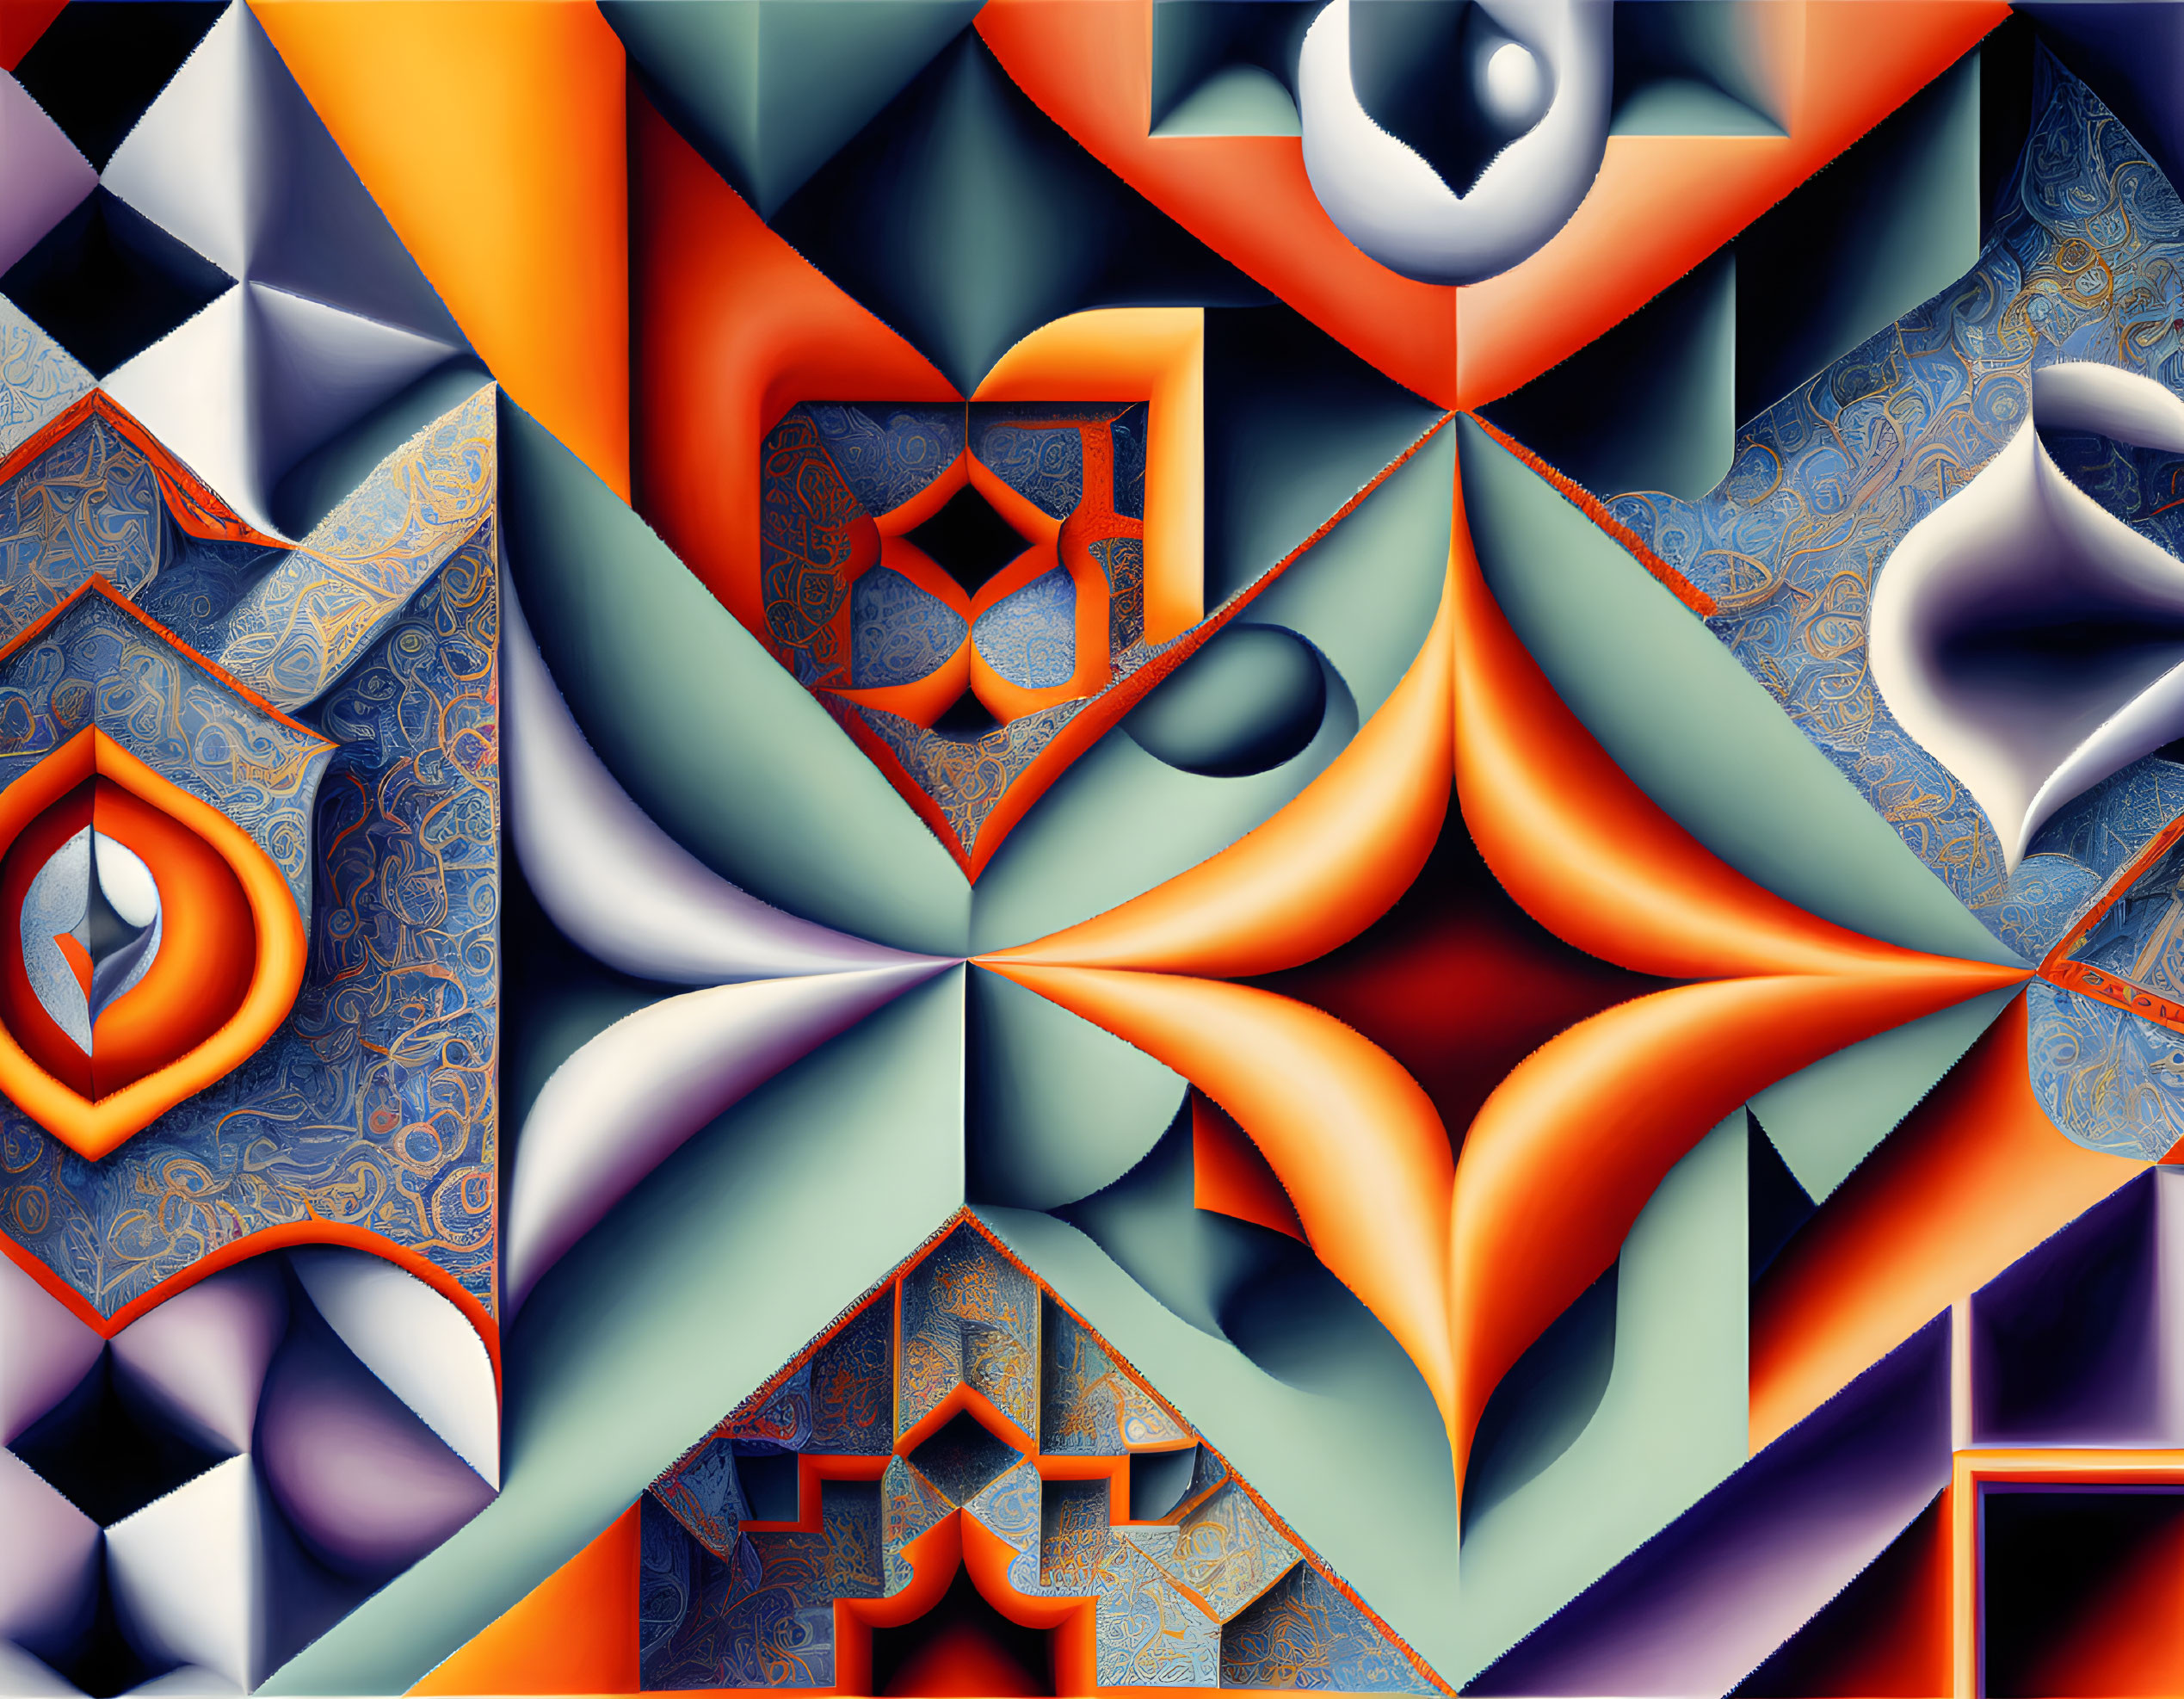 Vibrant Orange, Blue, and White Geometric Kaleidoscope Art